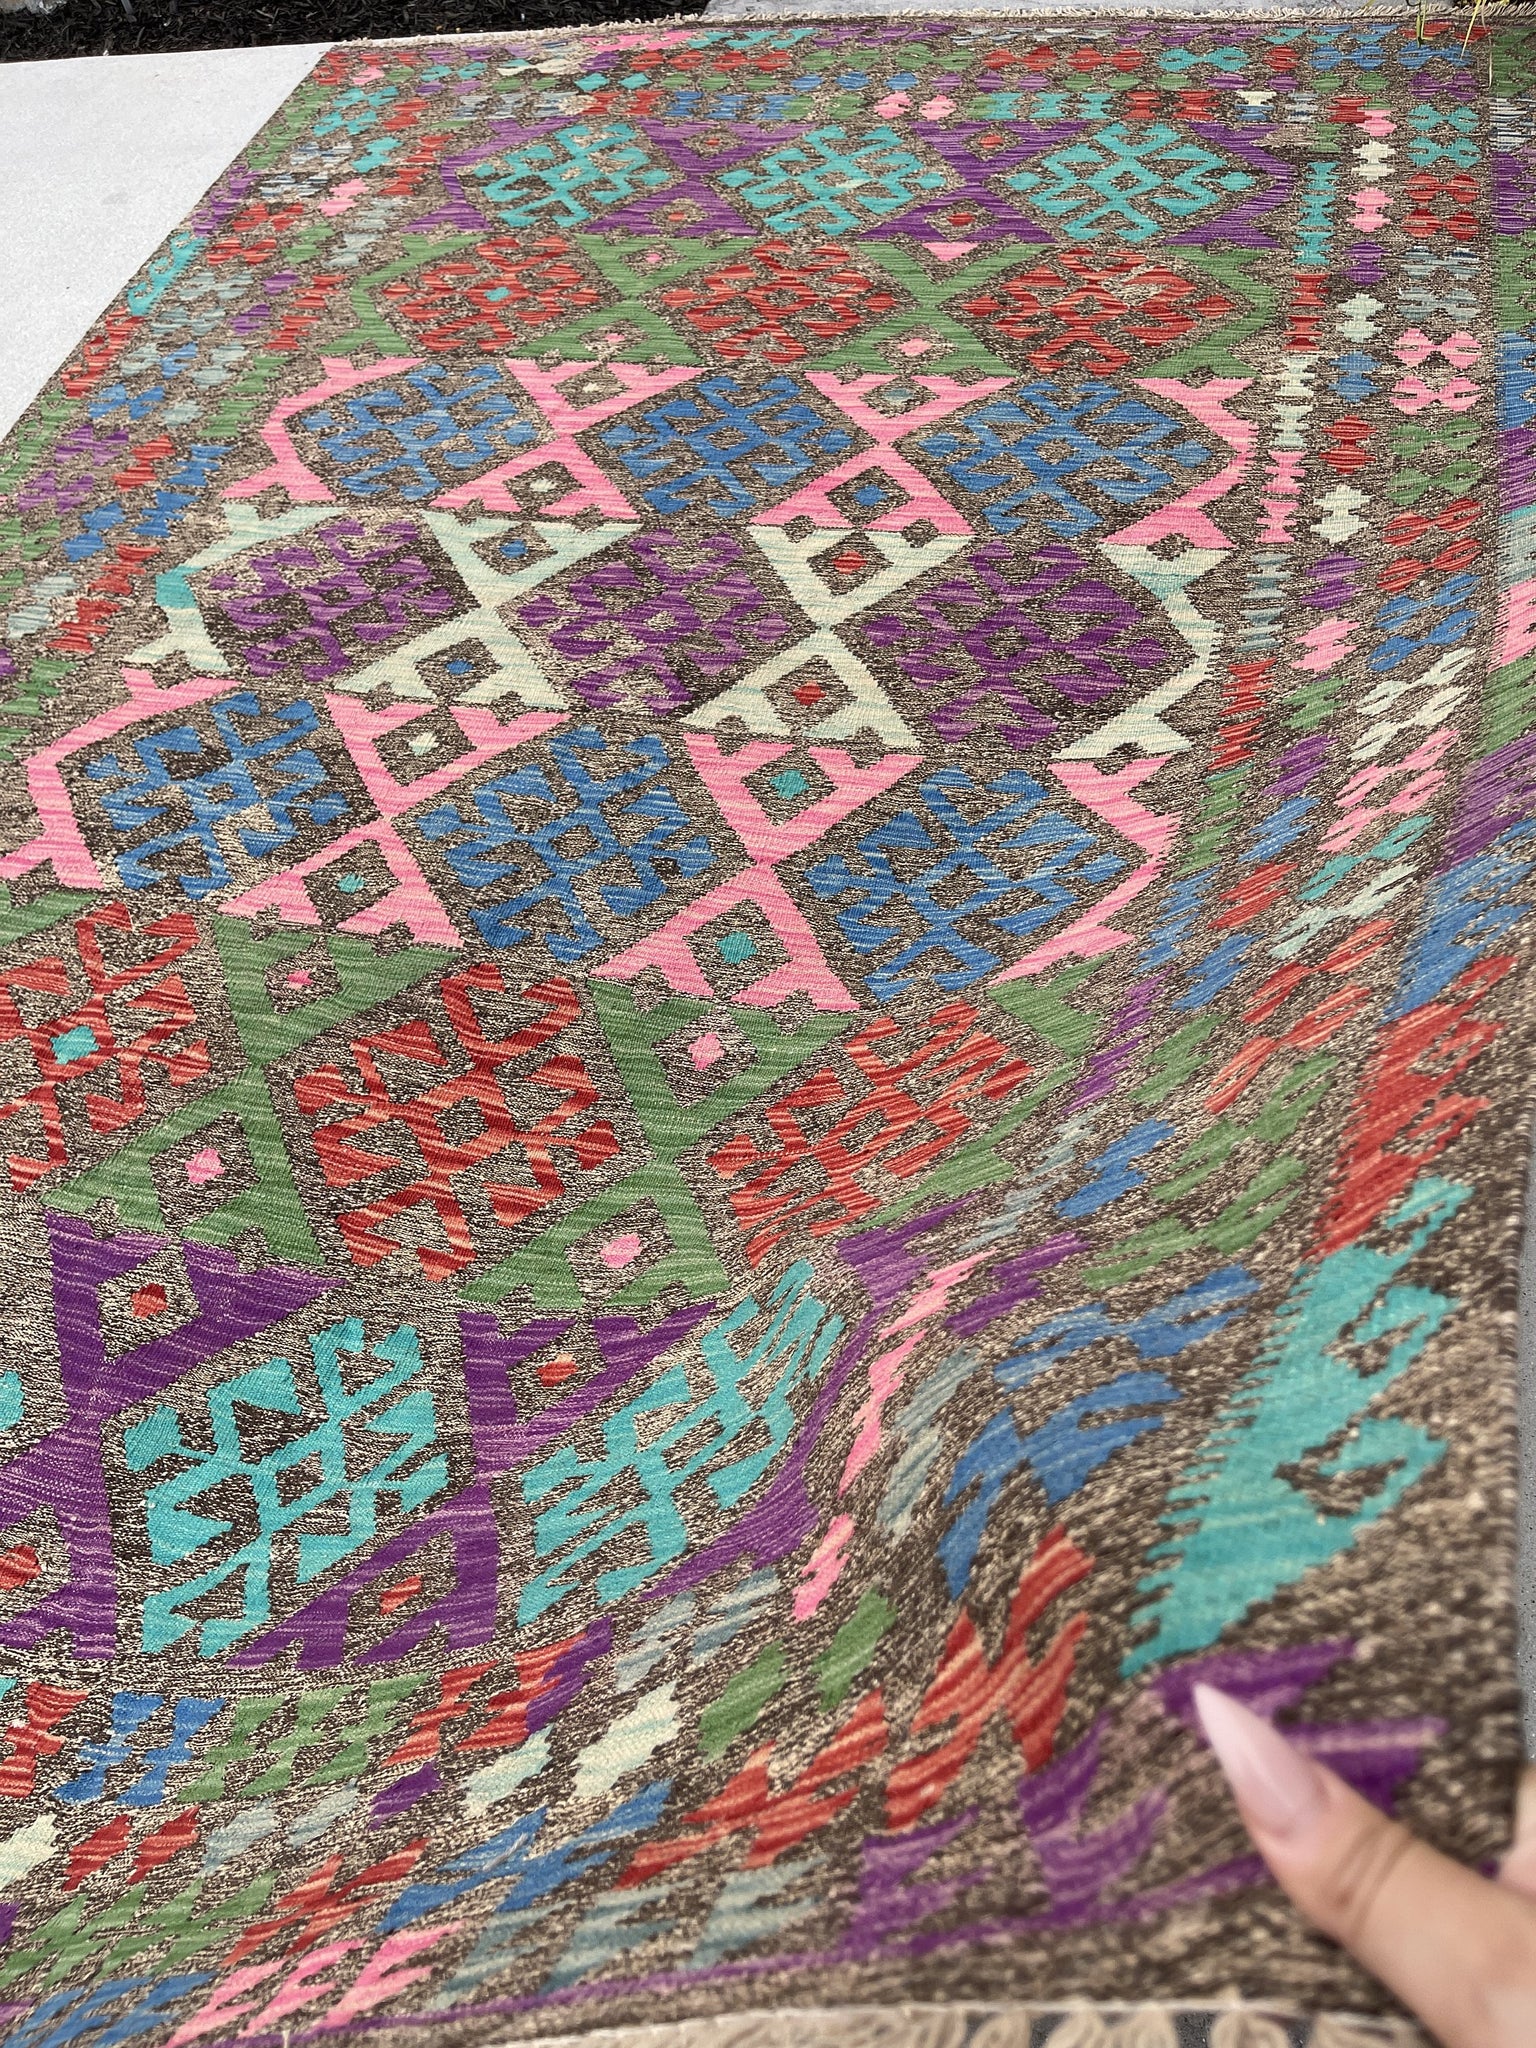 7x10 (215x305) Handmade Afghan Kilim Rug | Green Burnt Orange Turquoise Pink Blue|Flatweave Flat Weave Tribal Turkish Moroccan Oriental Wool